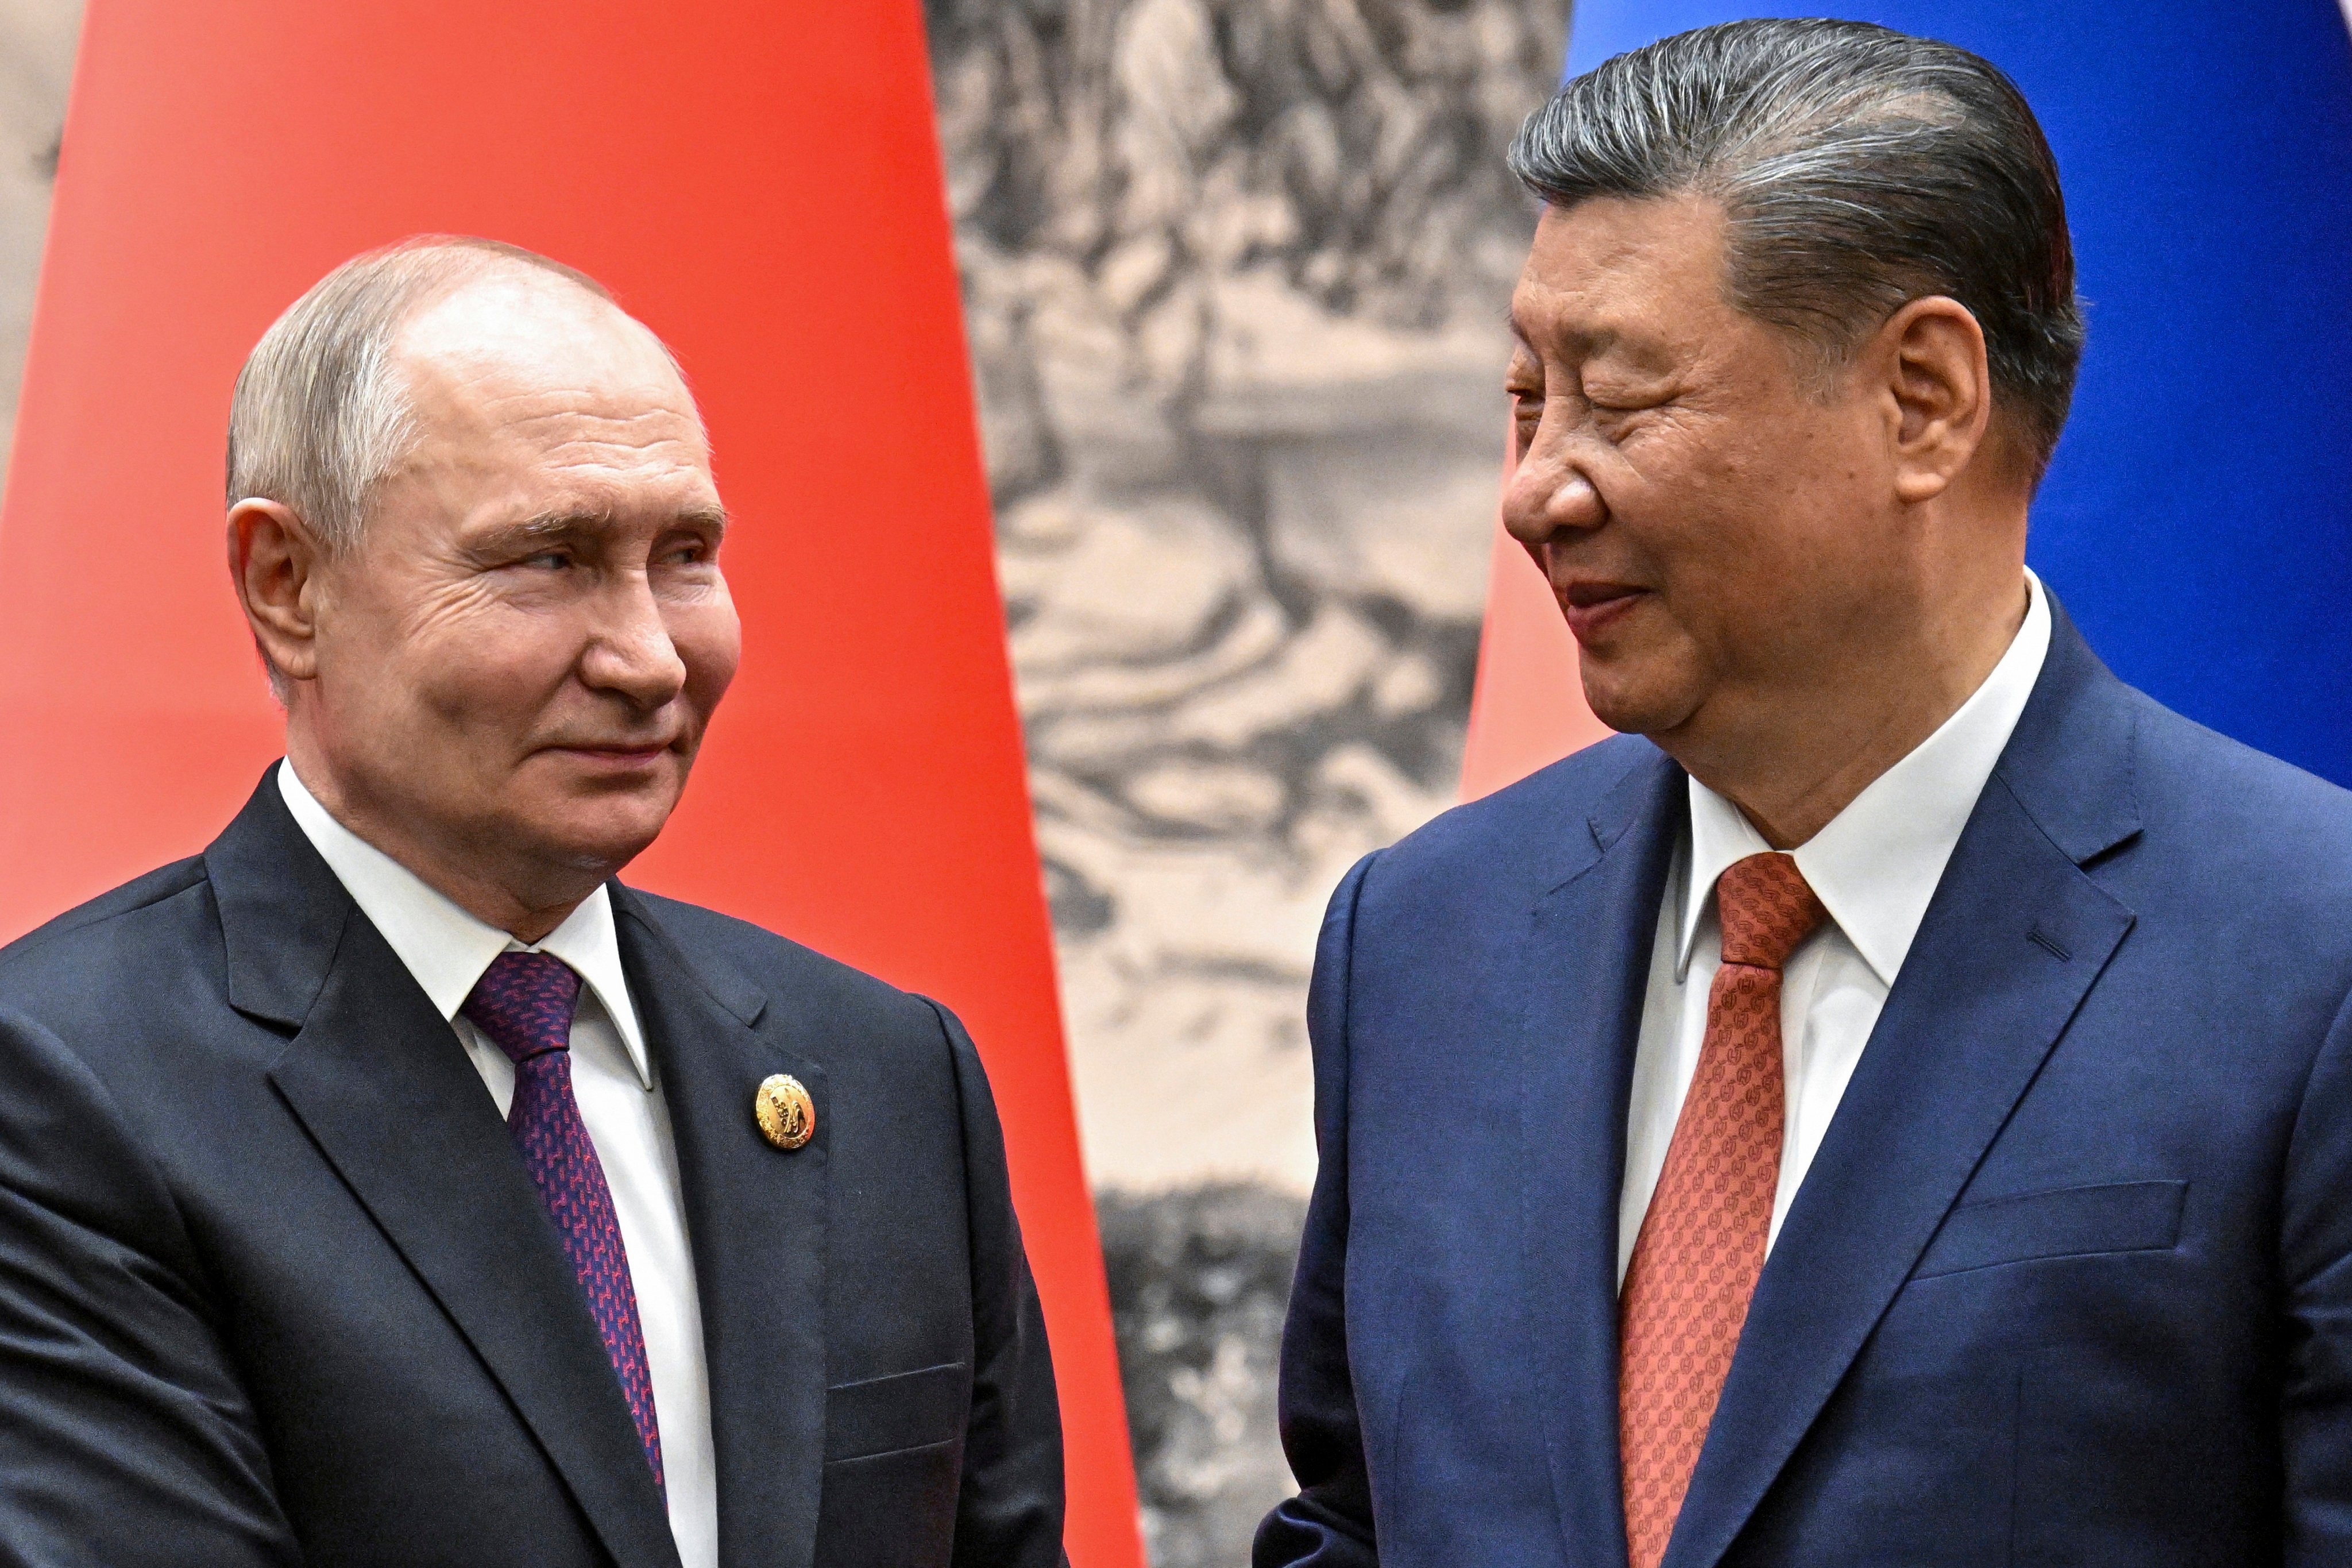 Russian President Vladimir Putin and Chinese President Xi Jinping shake hands prior to their talks in Beijing in May. Photo: Sputnik, Kremlin Pool Photo via AP